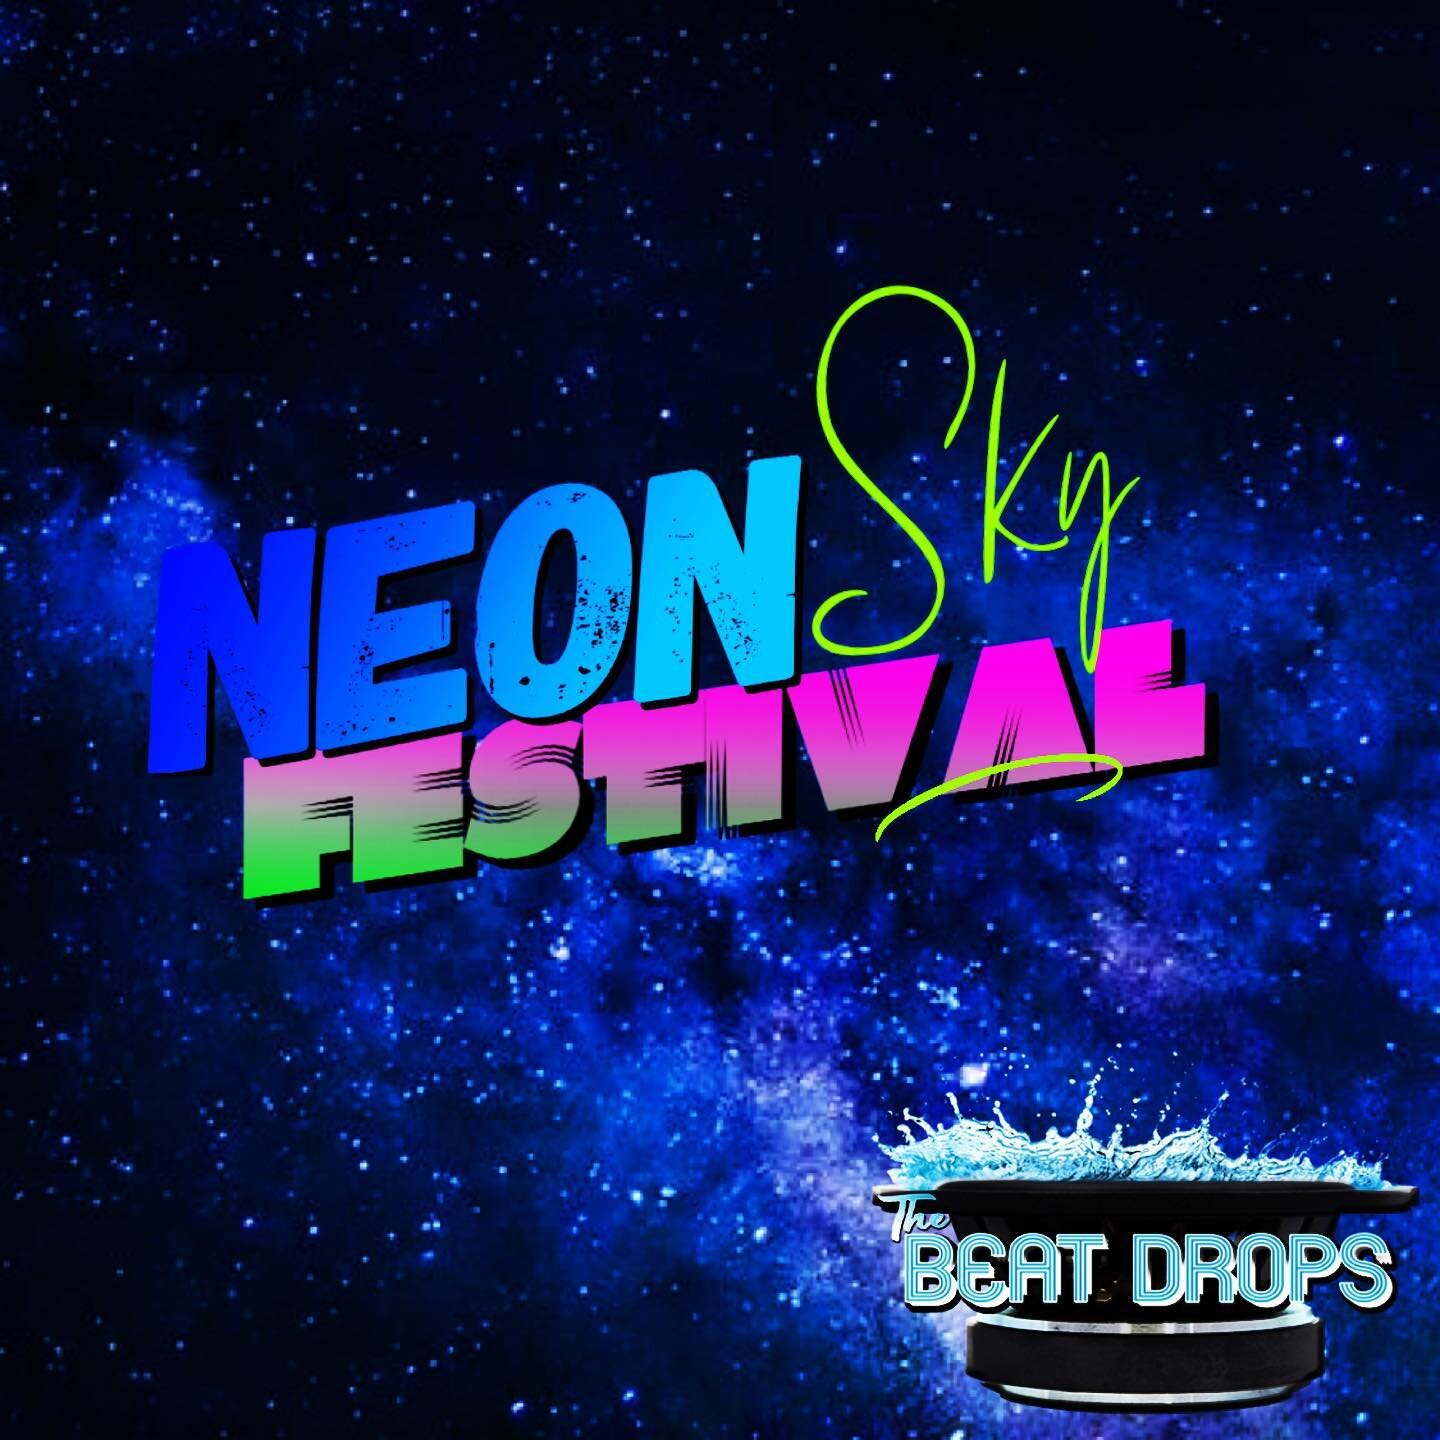 THE BEAT DROPS DJ ADAM SABER NEON SKY FESTIVAL NIGHT NATION RUN